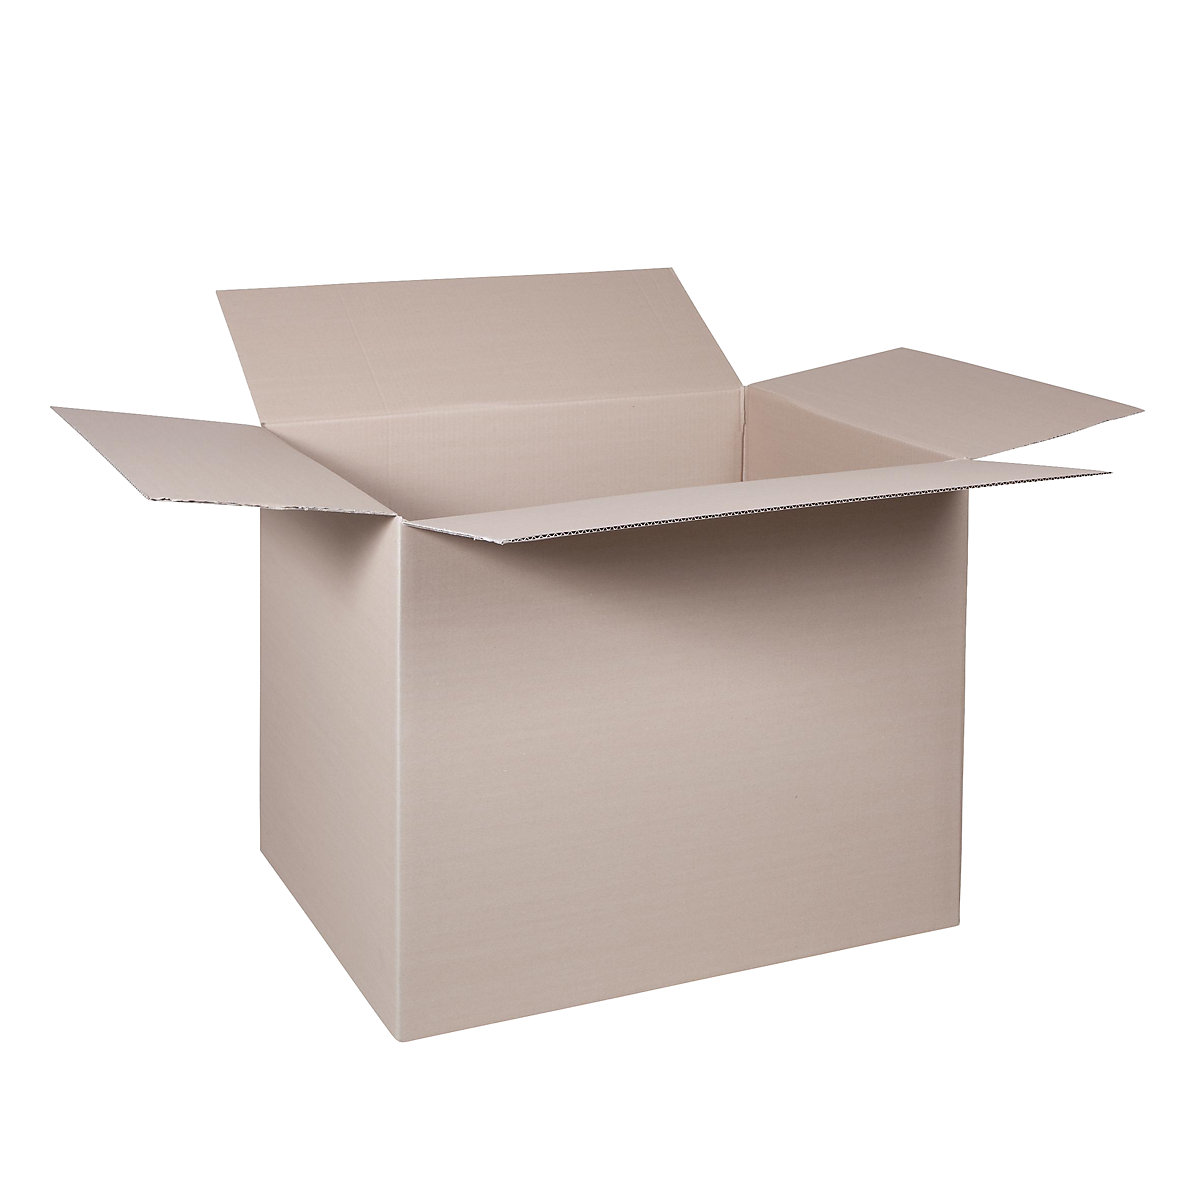 Folding cardboard box, FEFCO 0201, made of single fluted cardboard, internal dimensions 780 x 580 x 600 mm, pack of 50-29